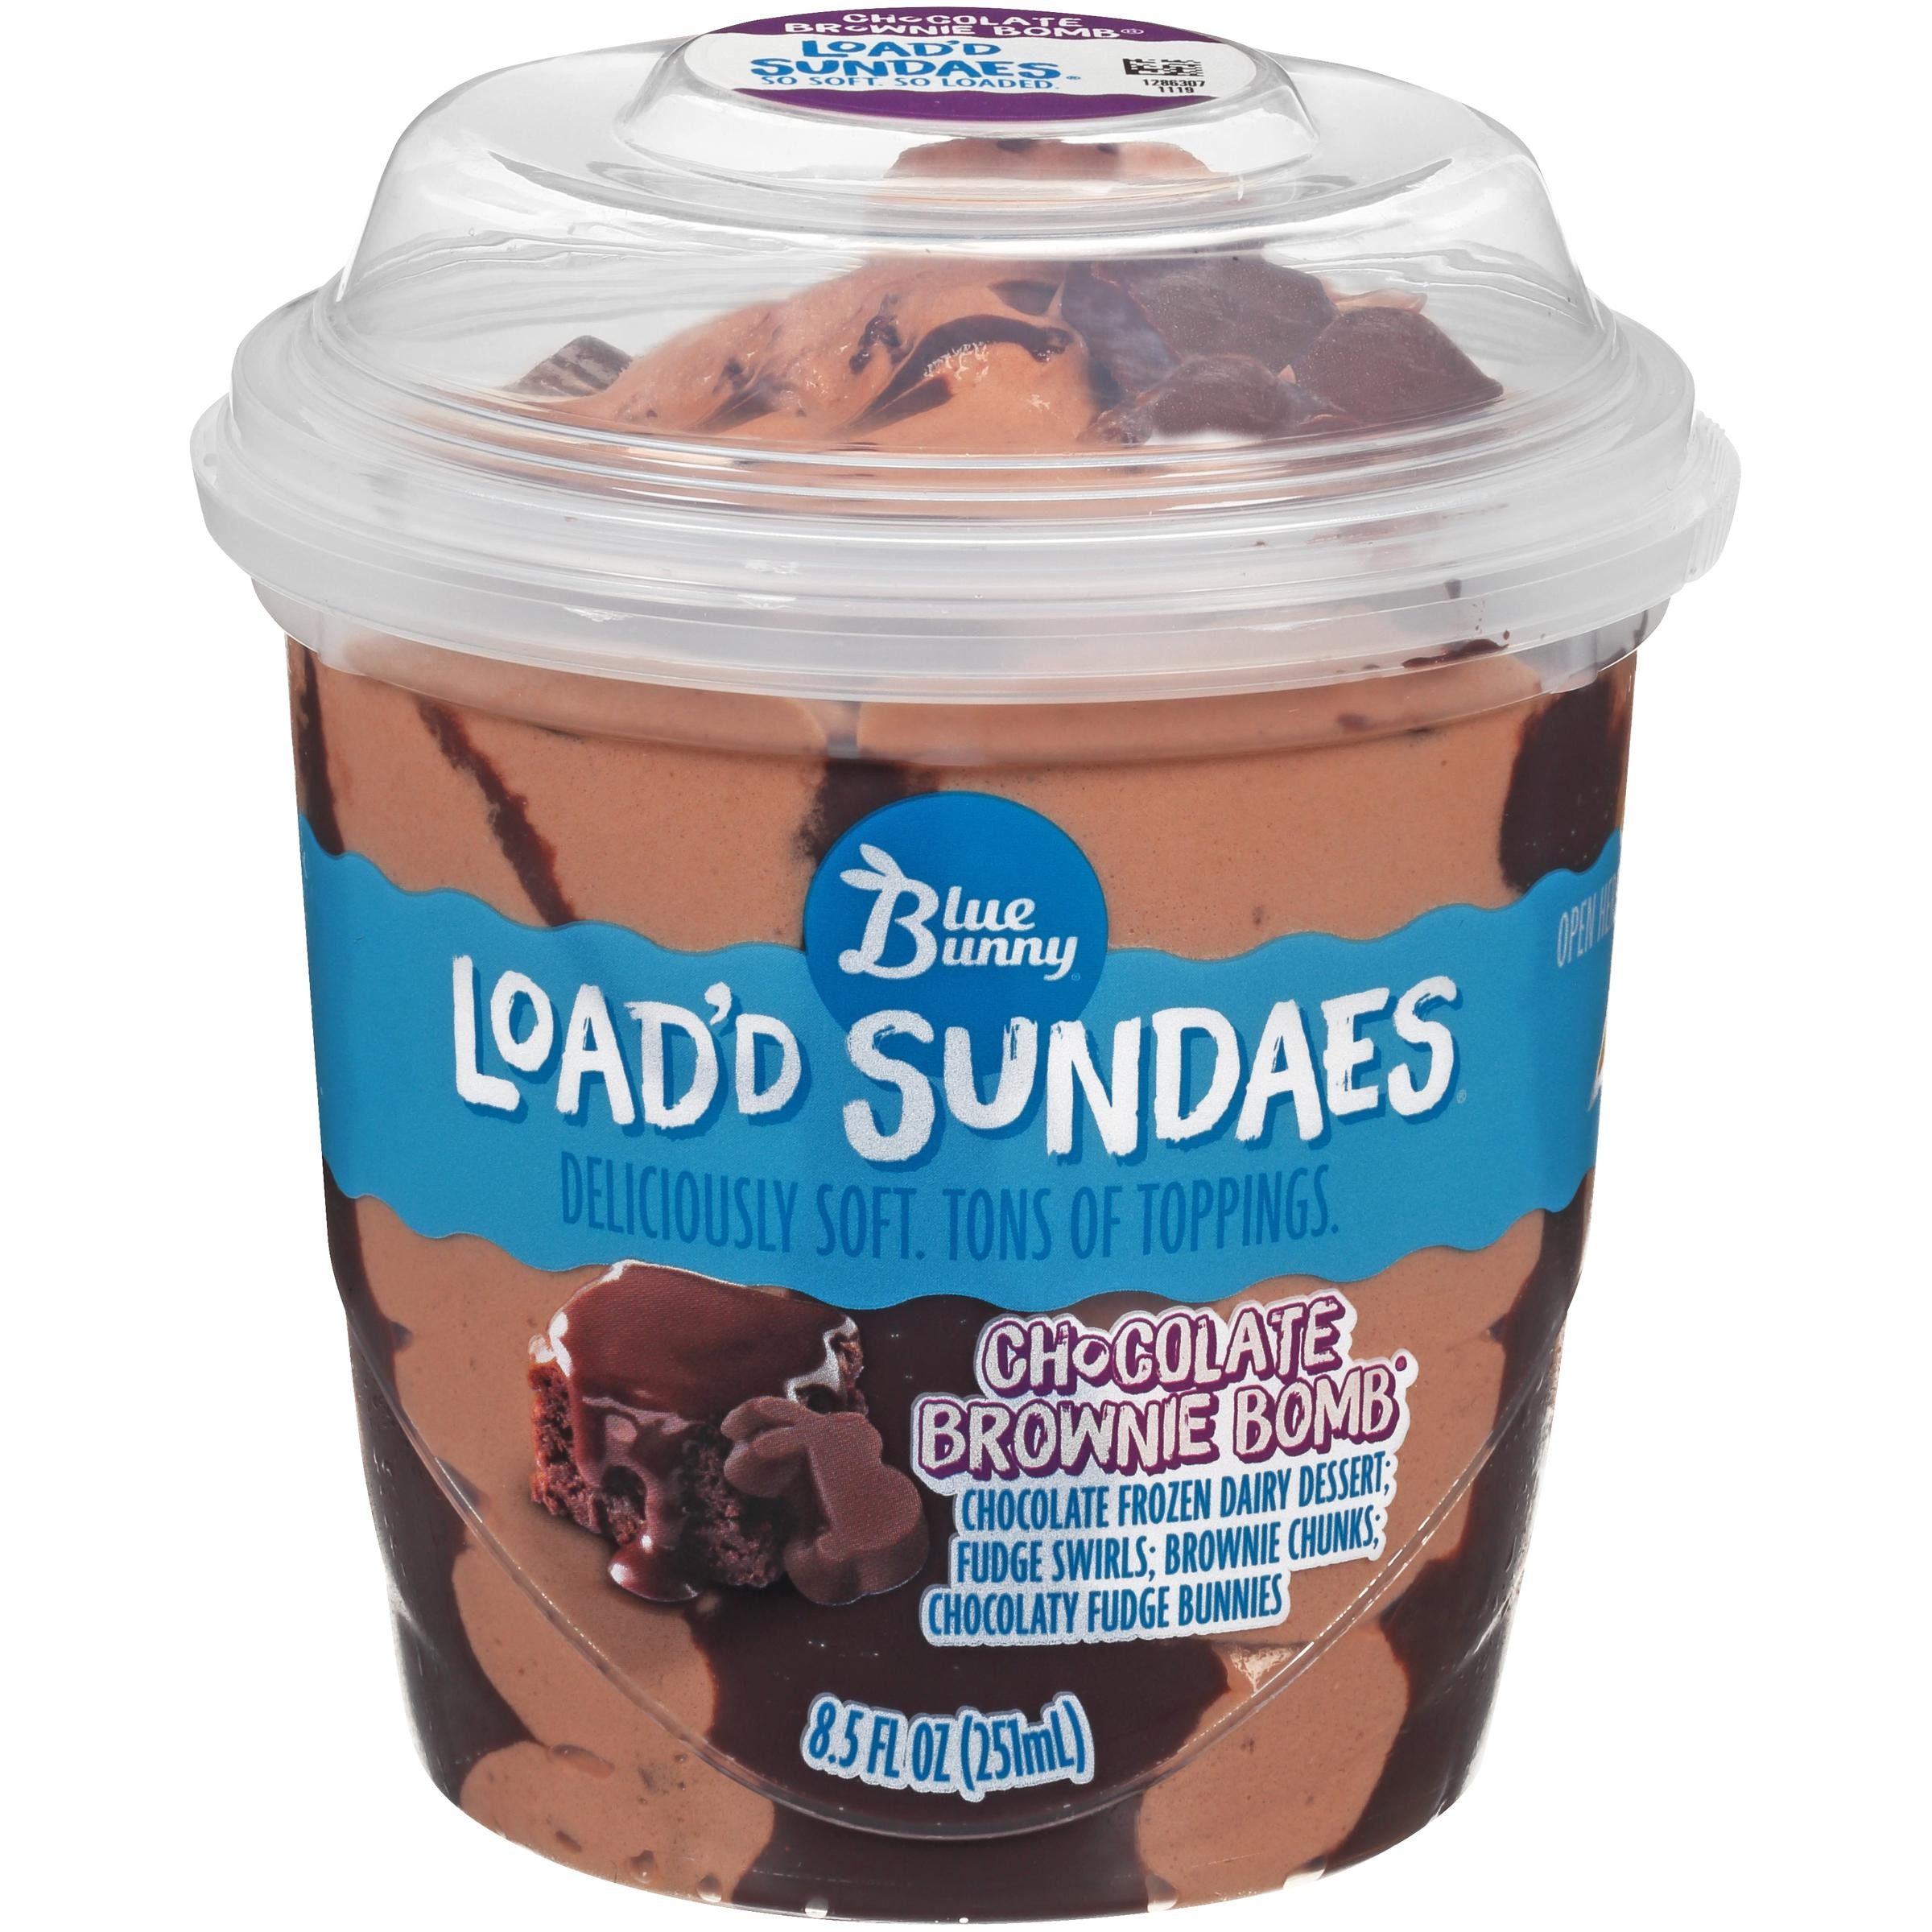 Load'd Sundaes Chocolate Brownie Bomb Ice Cream Cup